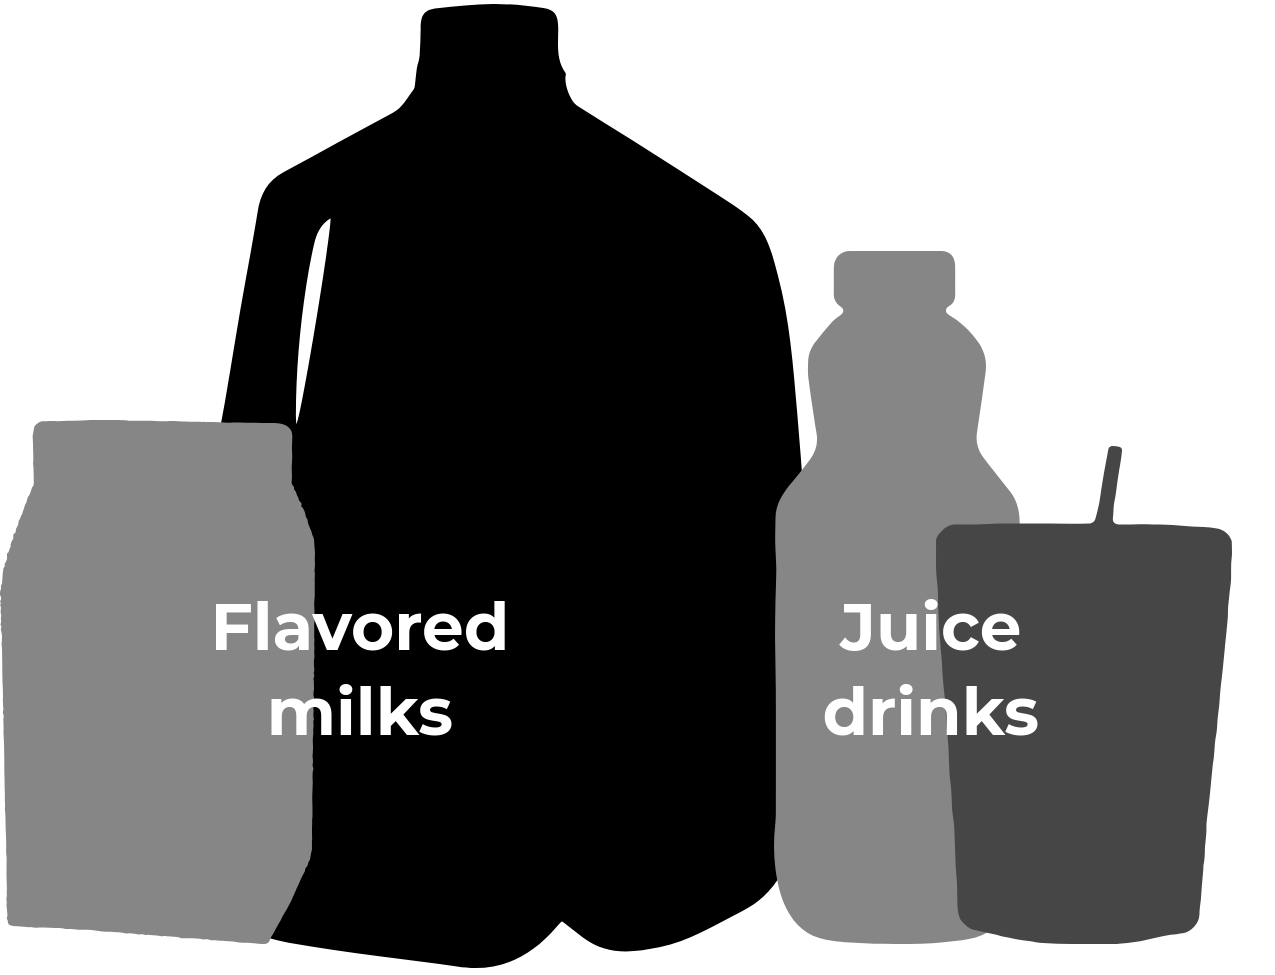 flavored milks and juice drinks